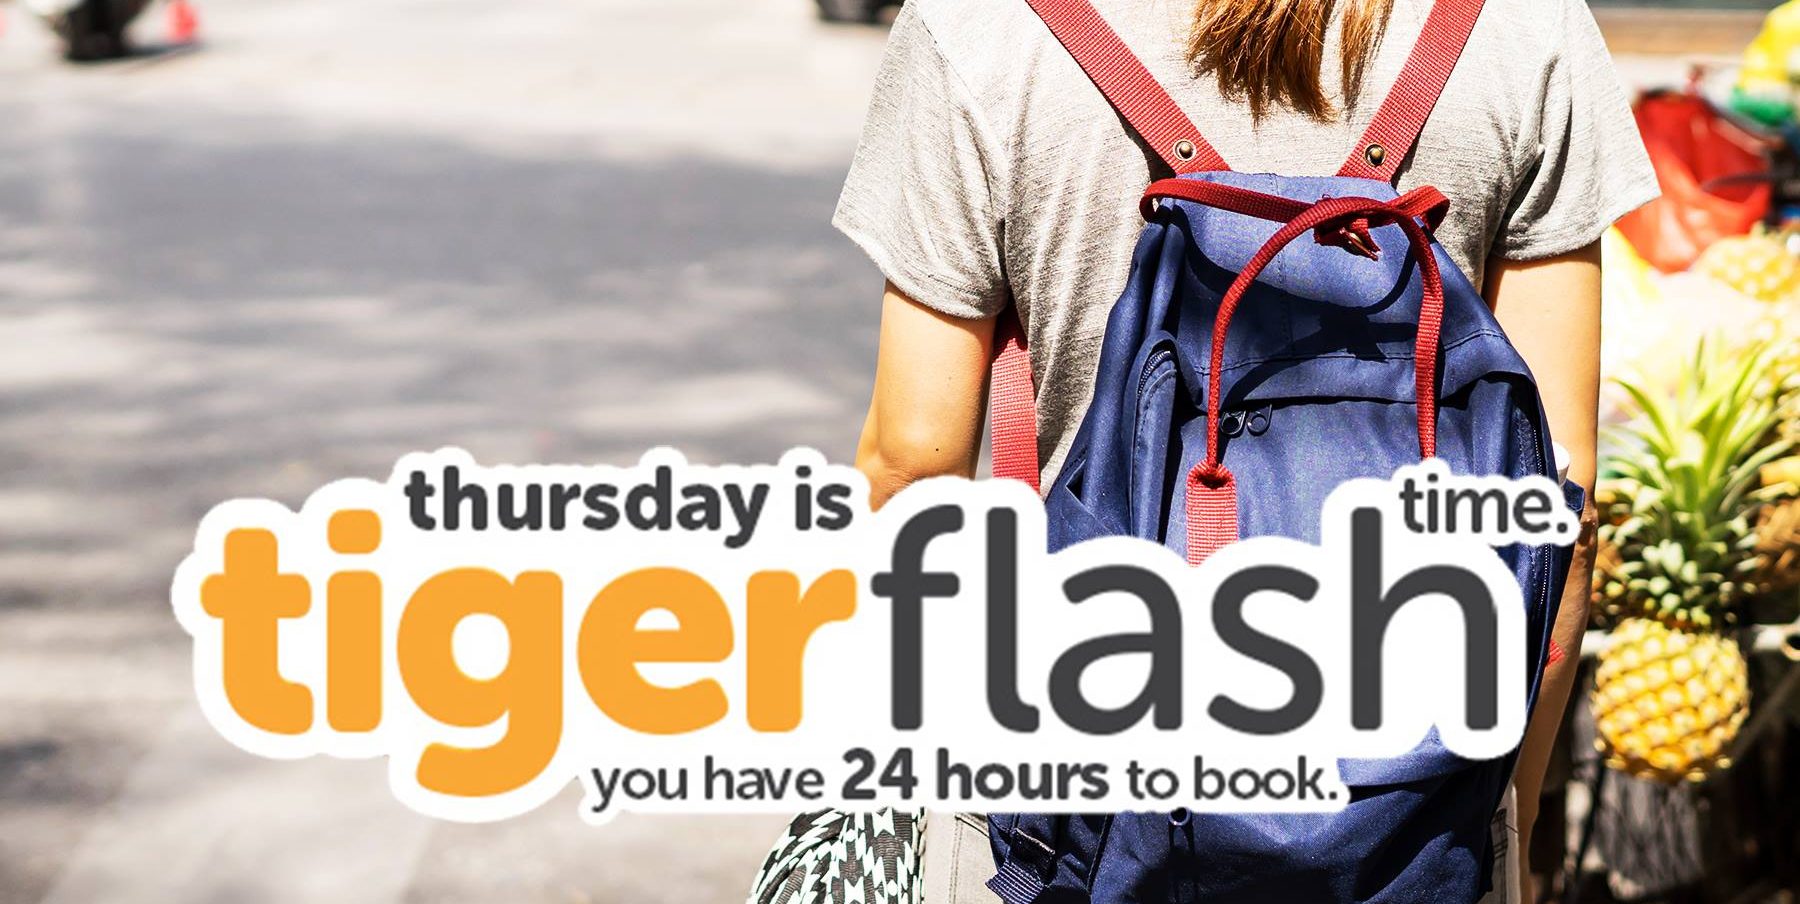 Tigerair Singapore Thursday Flash Deal Promotion 30 Mar – 31 Mar 2017